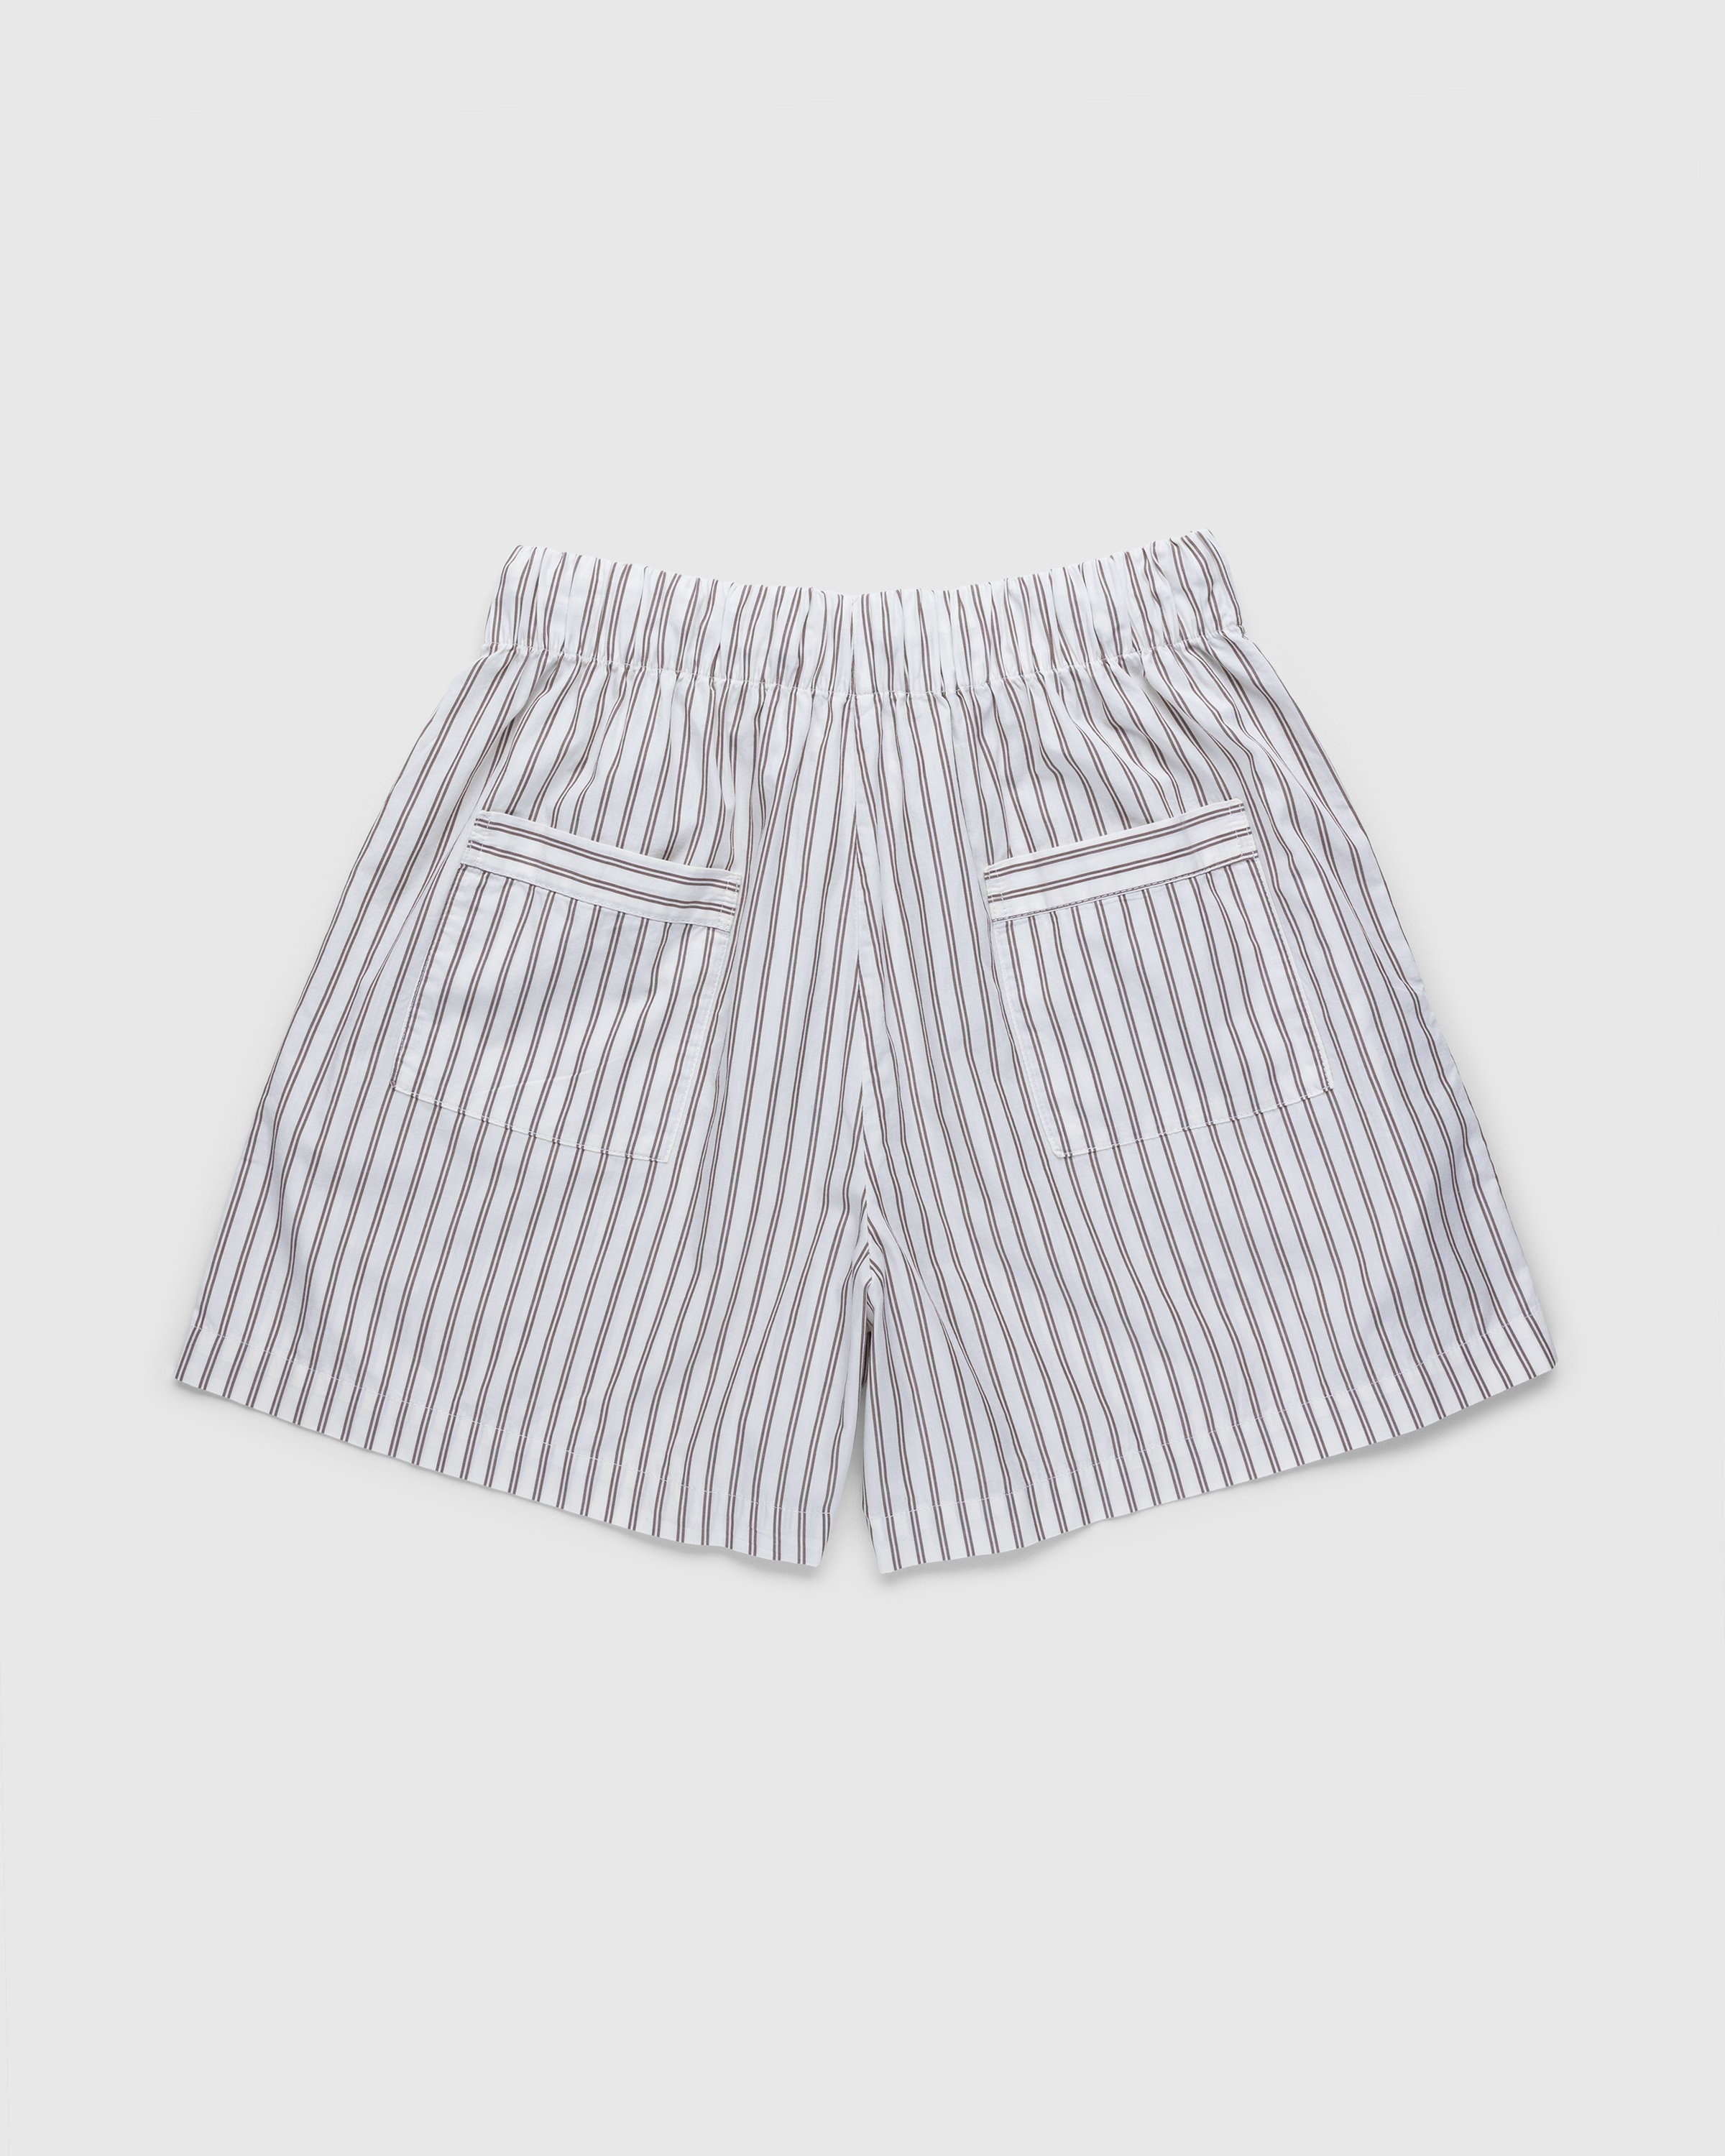 Tekla – Cotton Poplin Pyjamas Shorts Hopper Stripes - Pyjamas - Beige - Image 2